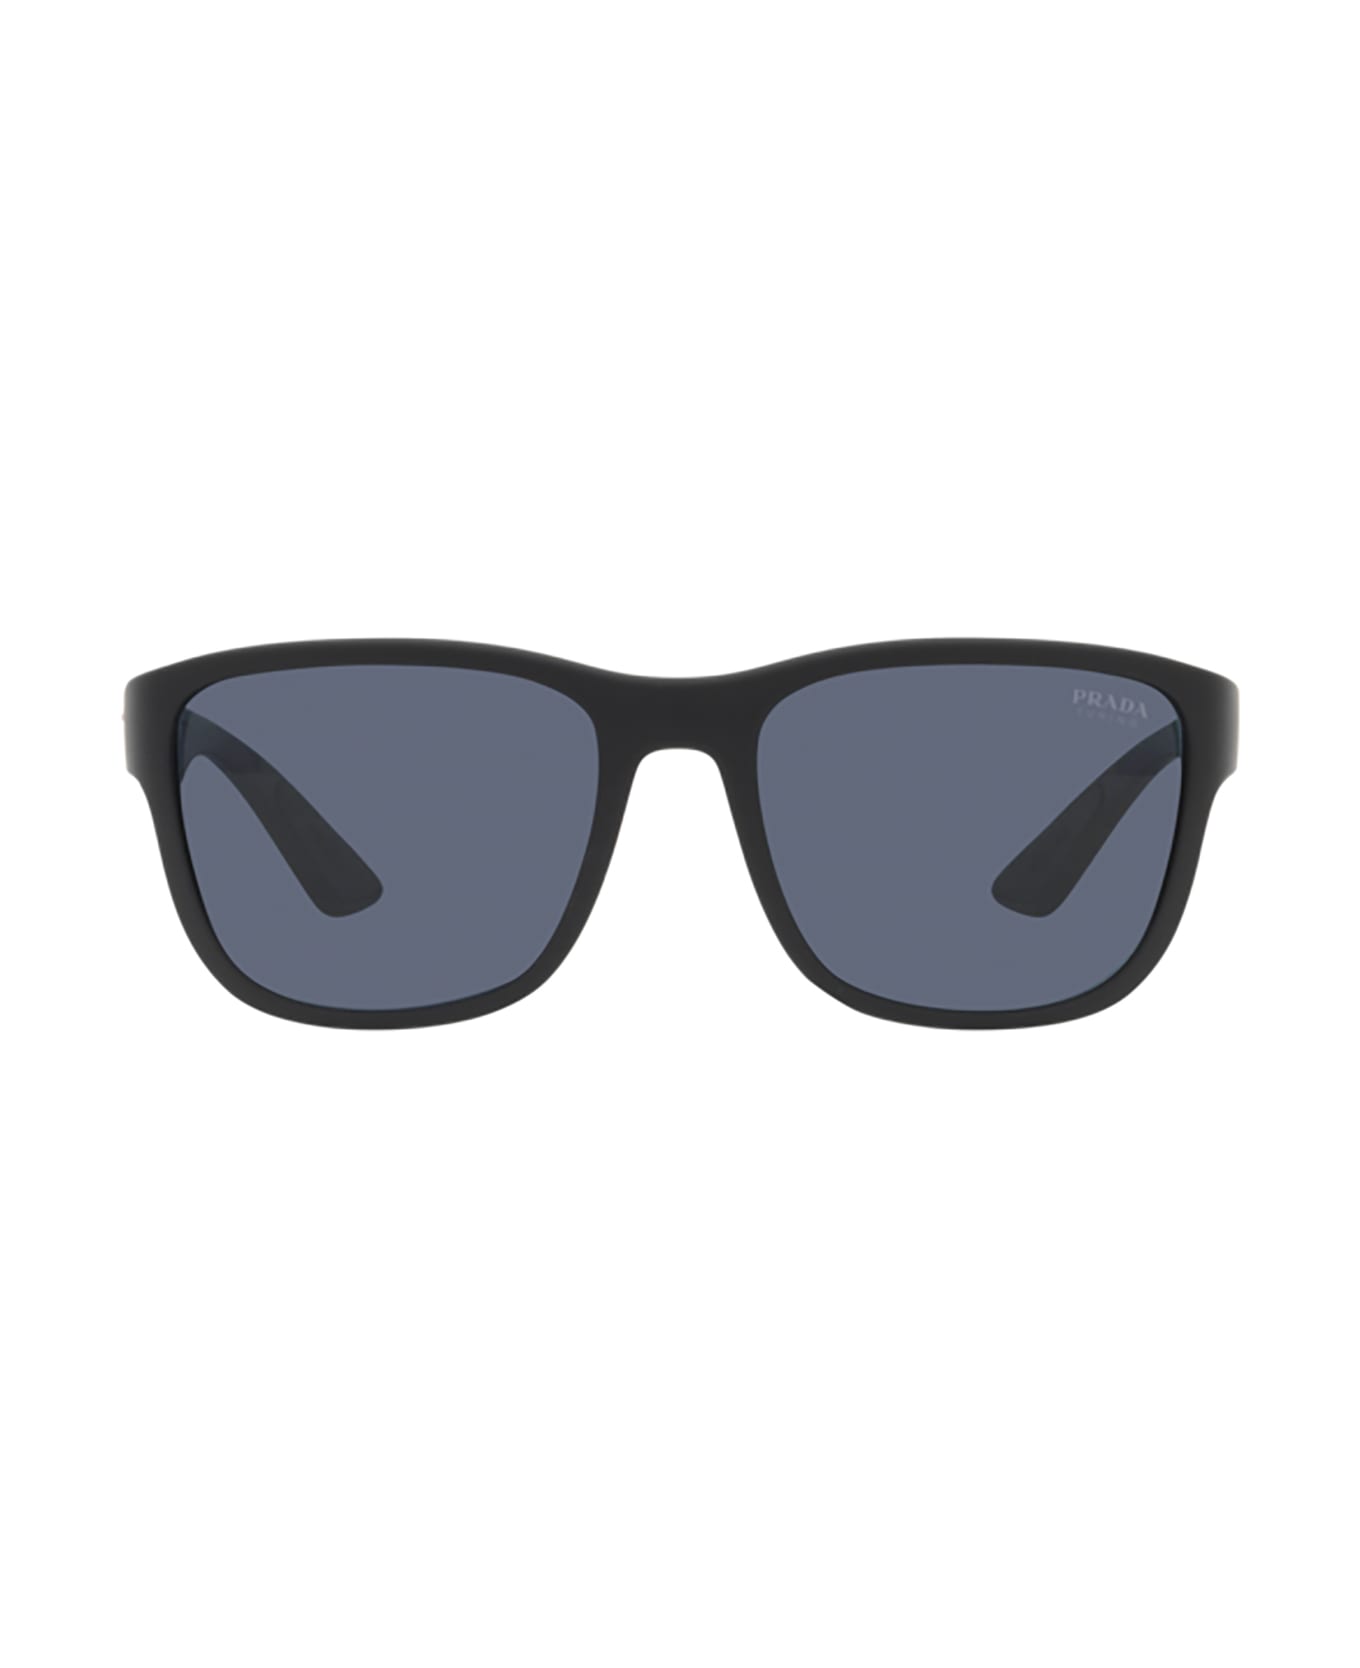 Prada Linea Rossa Ps 01us Rubber Black Sunglasses - Rubber Black サングラス